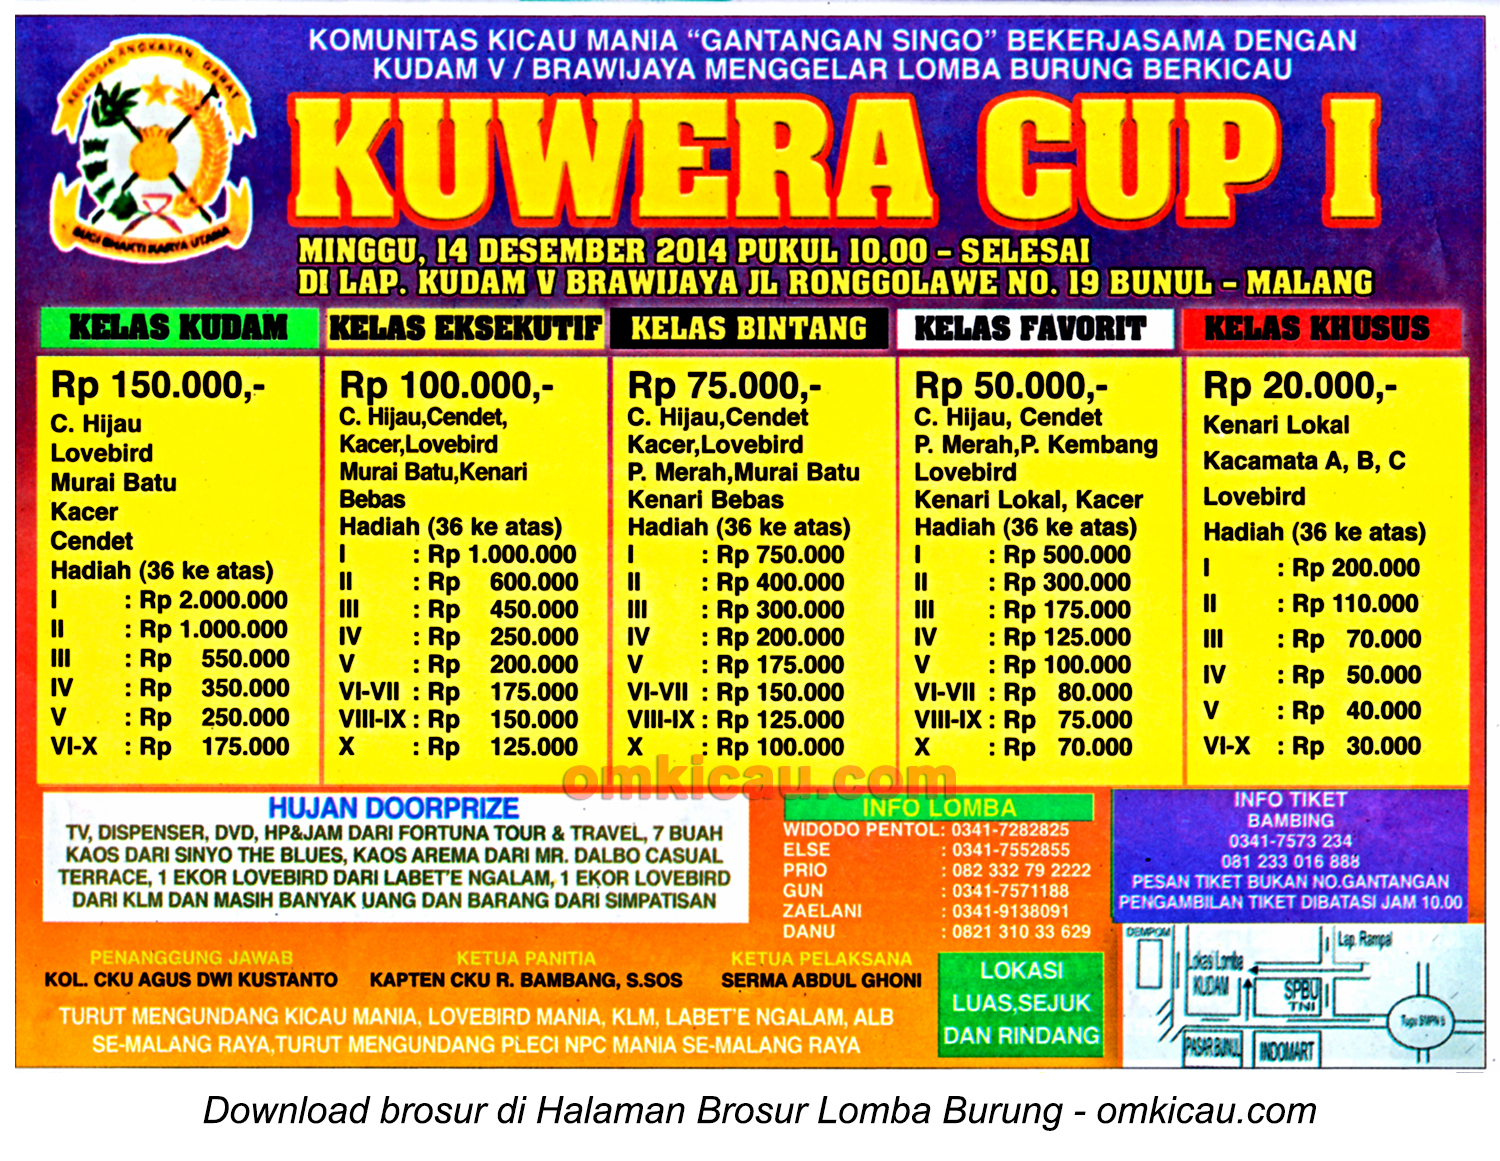 Brosur Lomba Burung Berkicau Kuwera Cup I, Malang, 14 Desember 2014